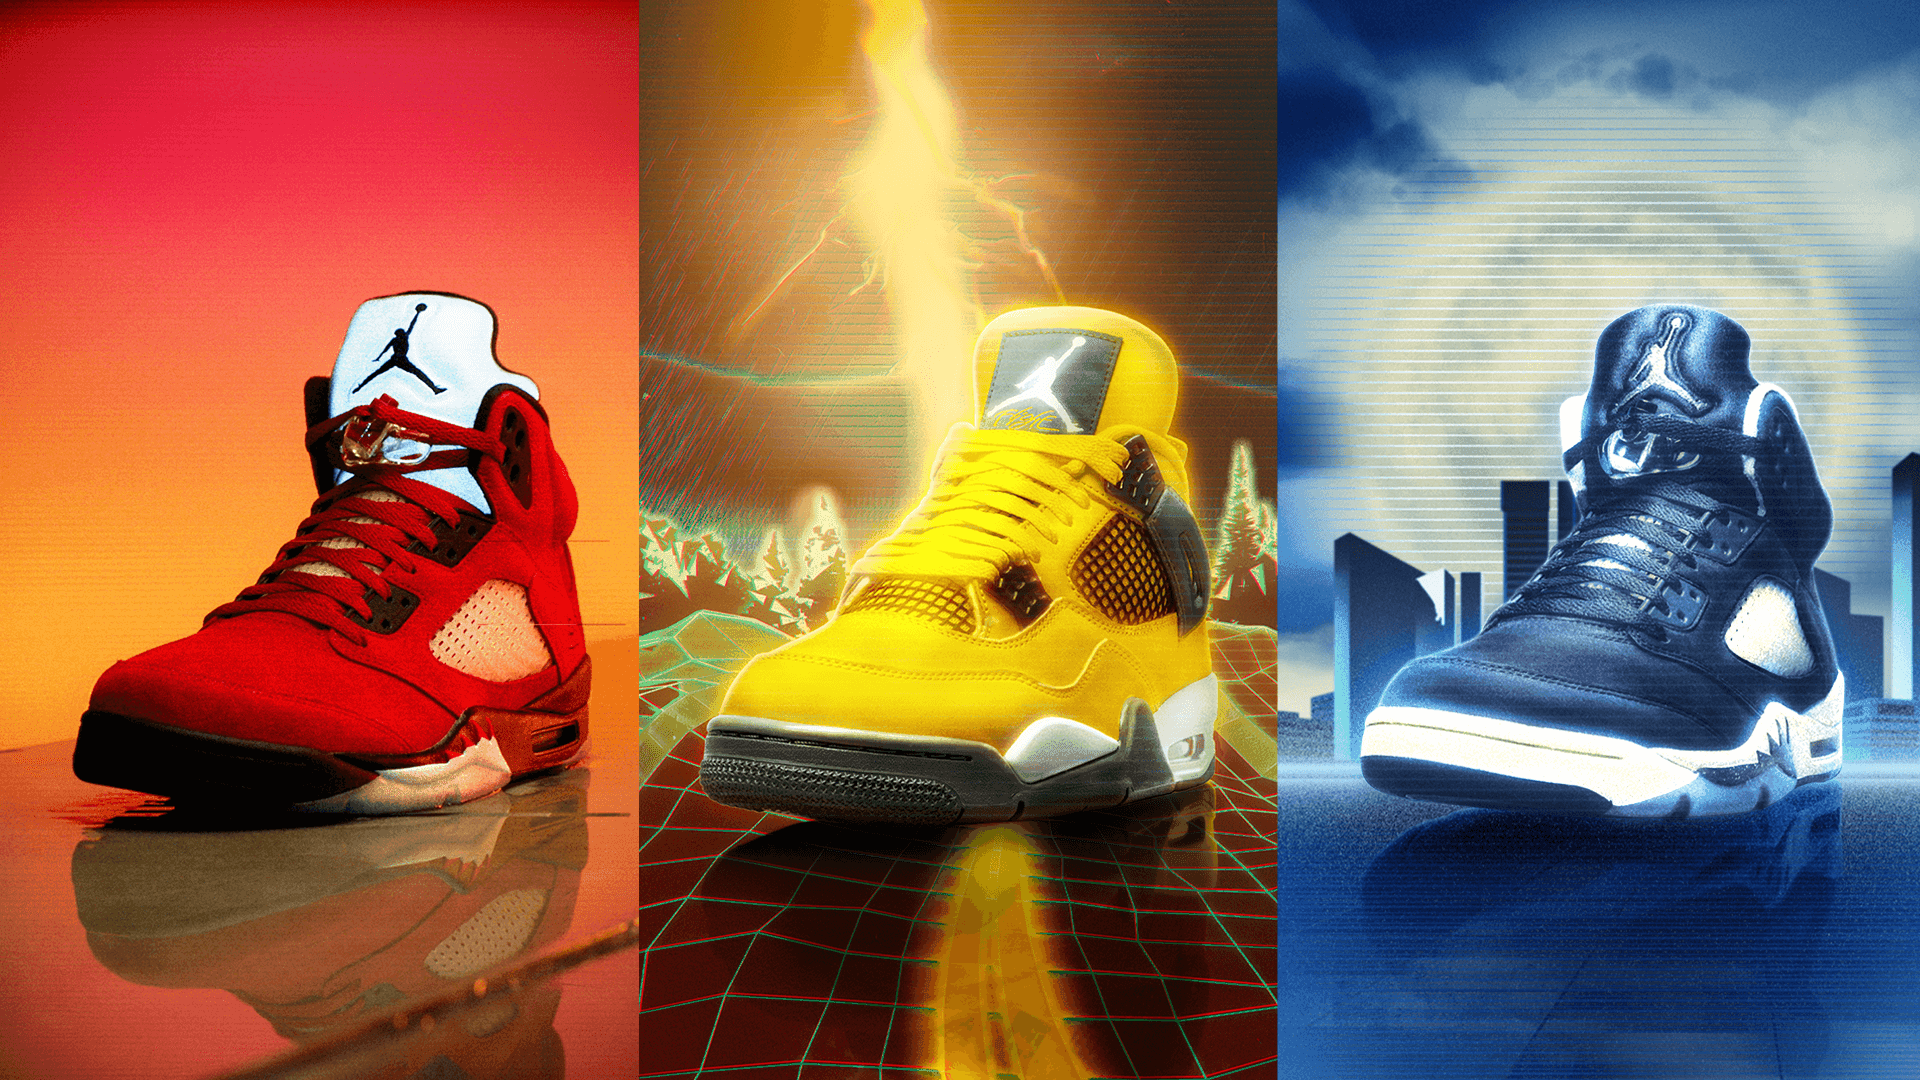 The Toro Bravo Jordan 5, Tour Yellow / Lightning Jordan 4, and Moonlight Jordan 5 sneakers rendered side by side